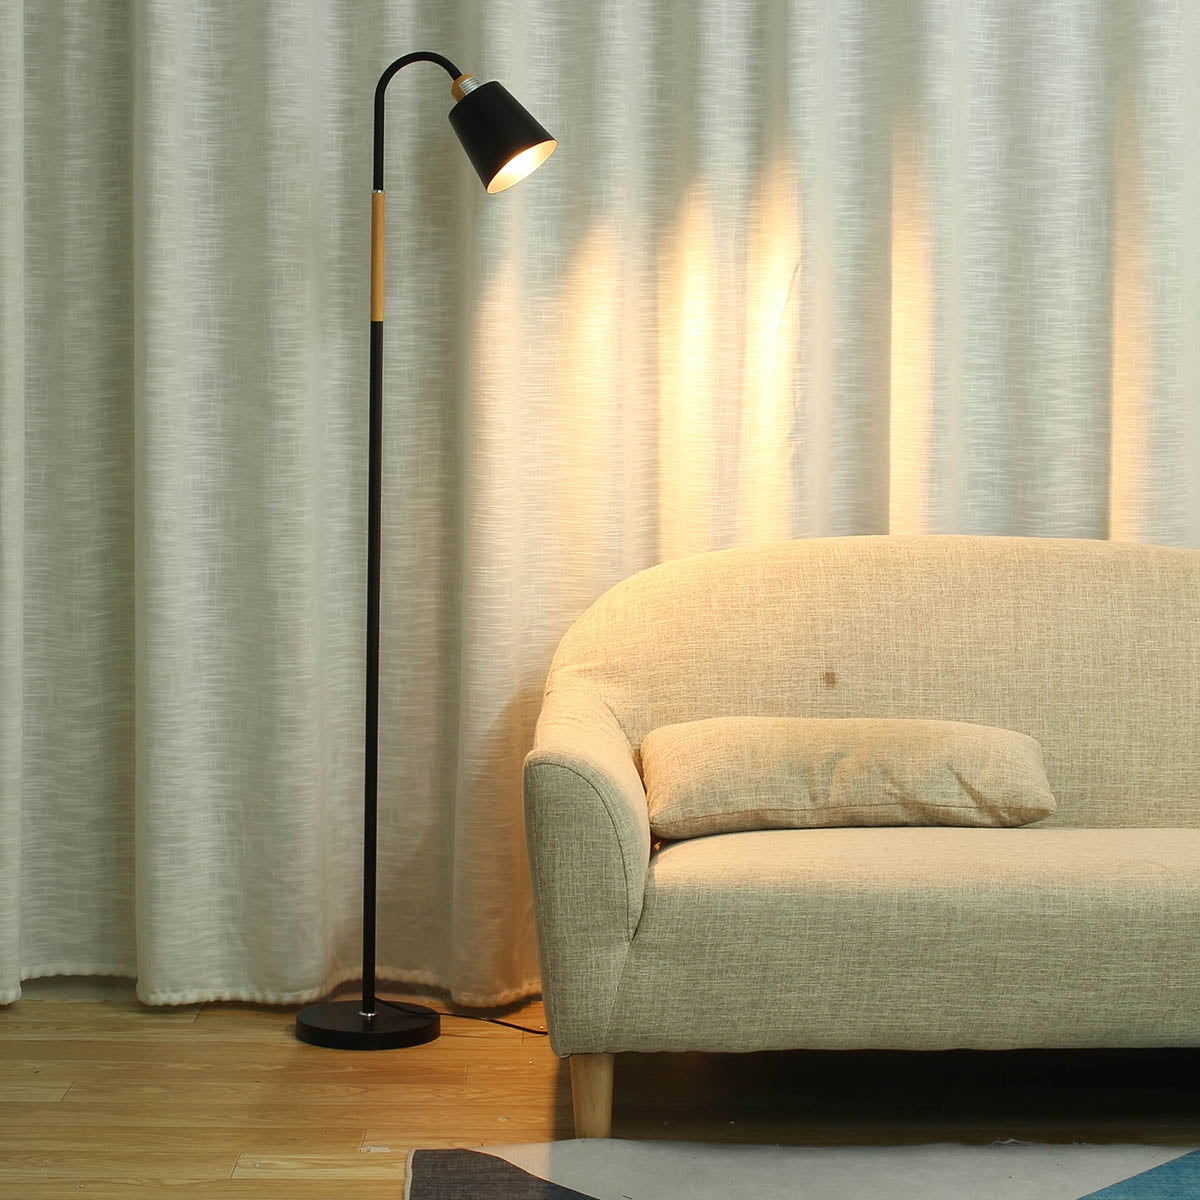 Adjustable Touch Control Standing Lamp, Floor Standing Lamps For Bedroom